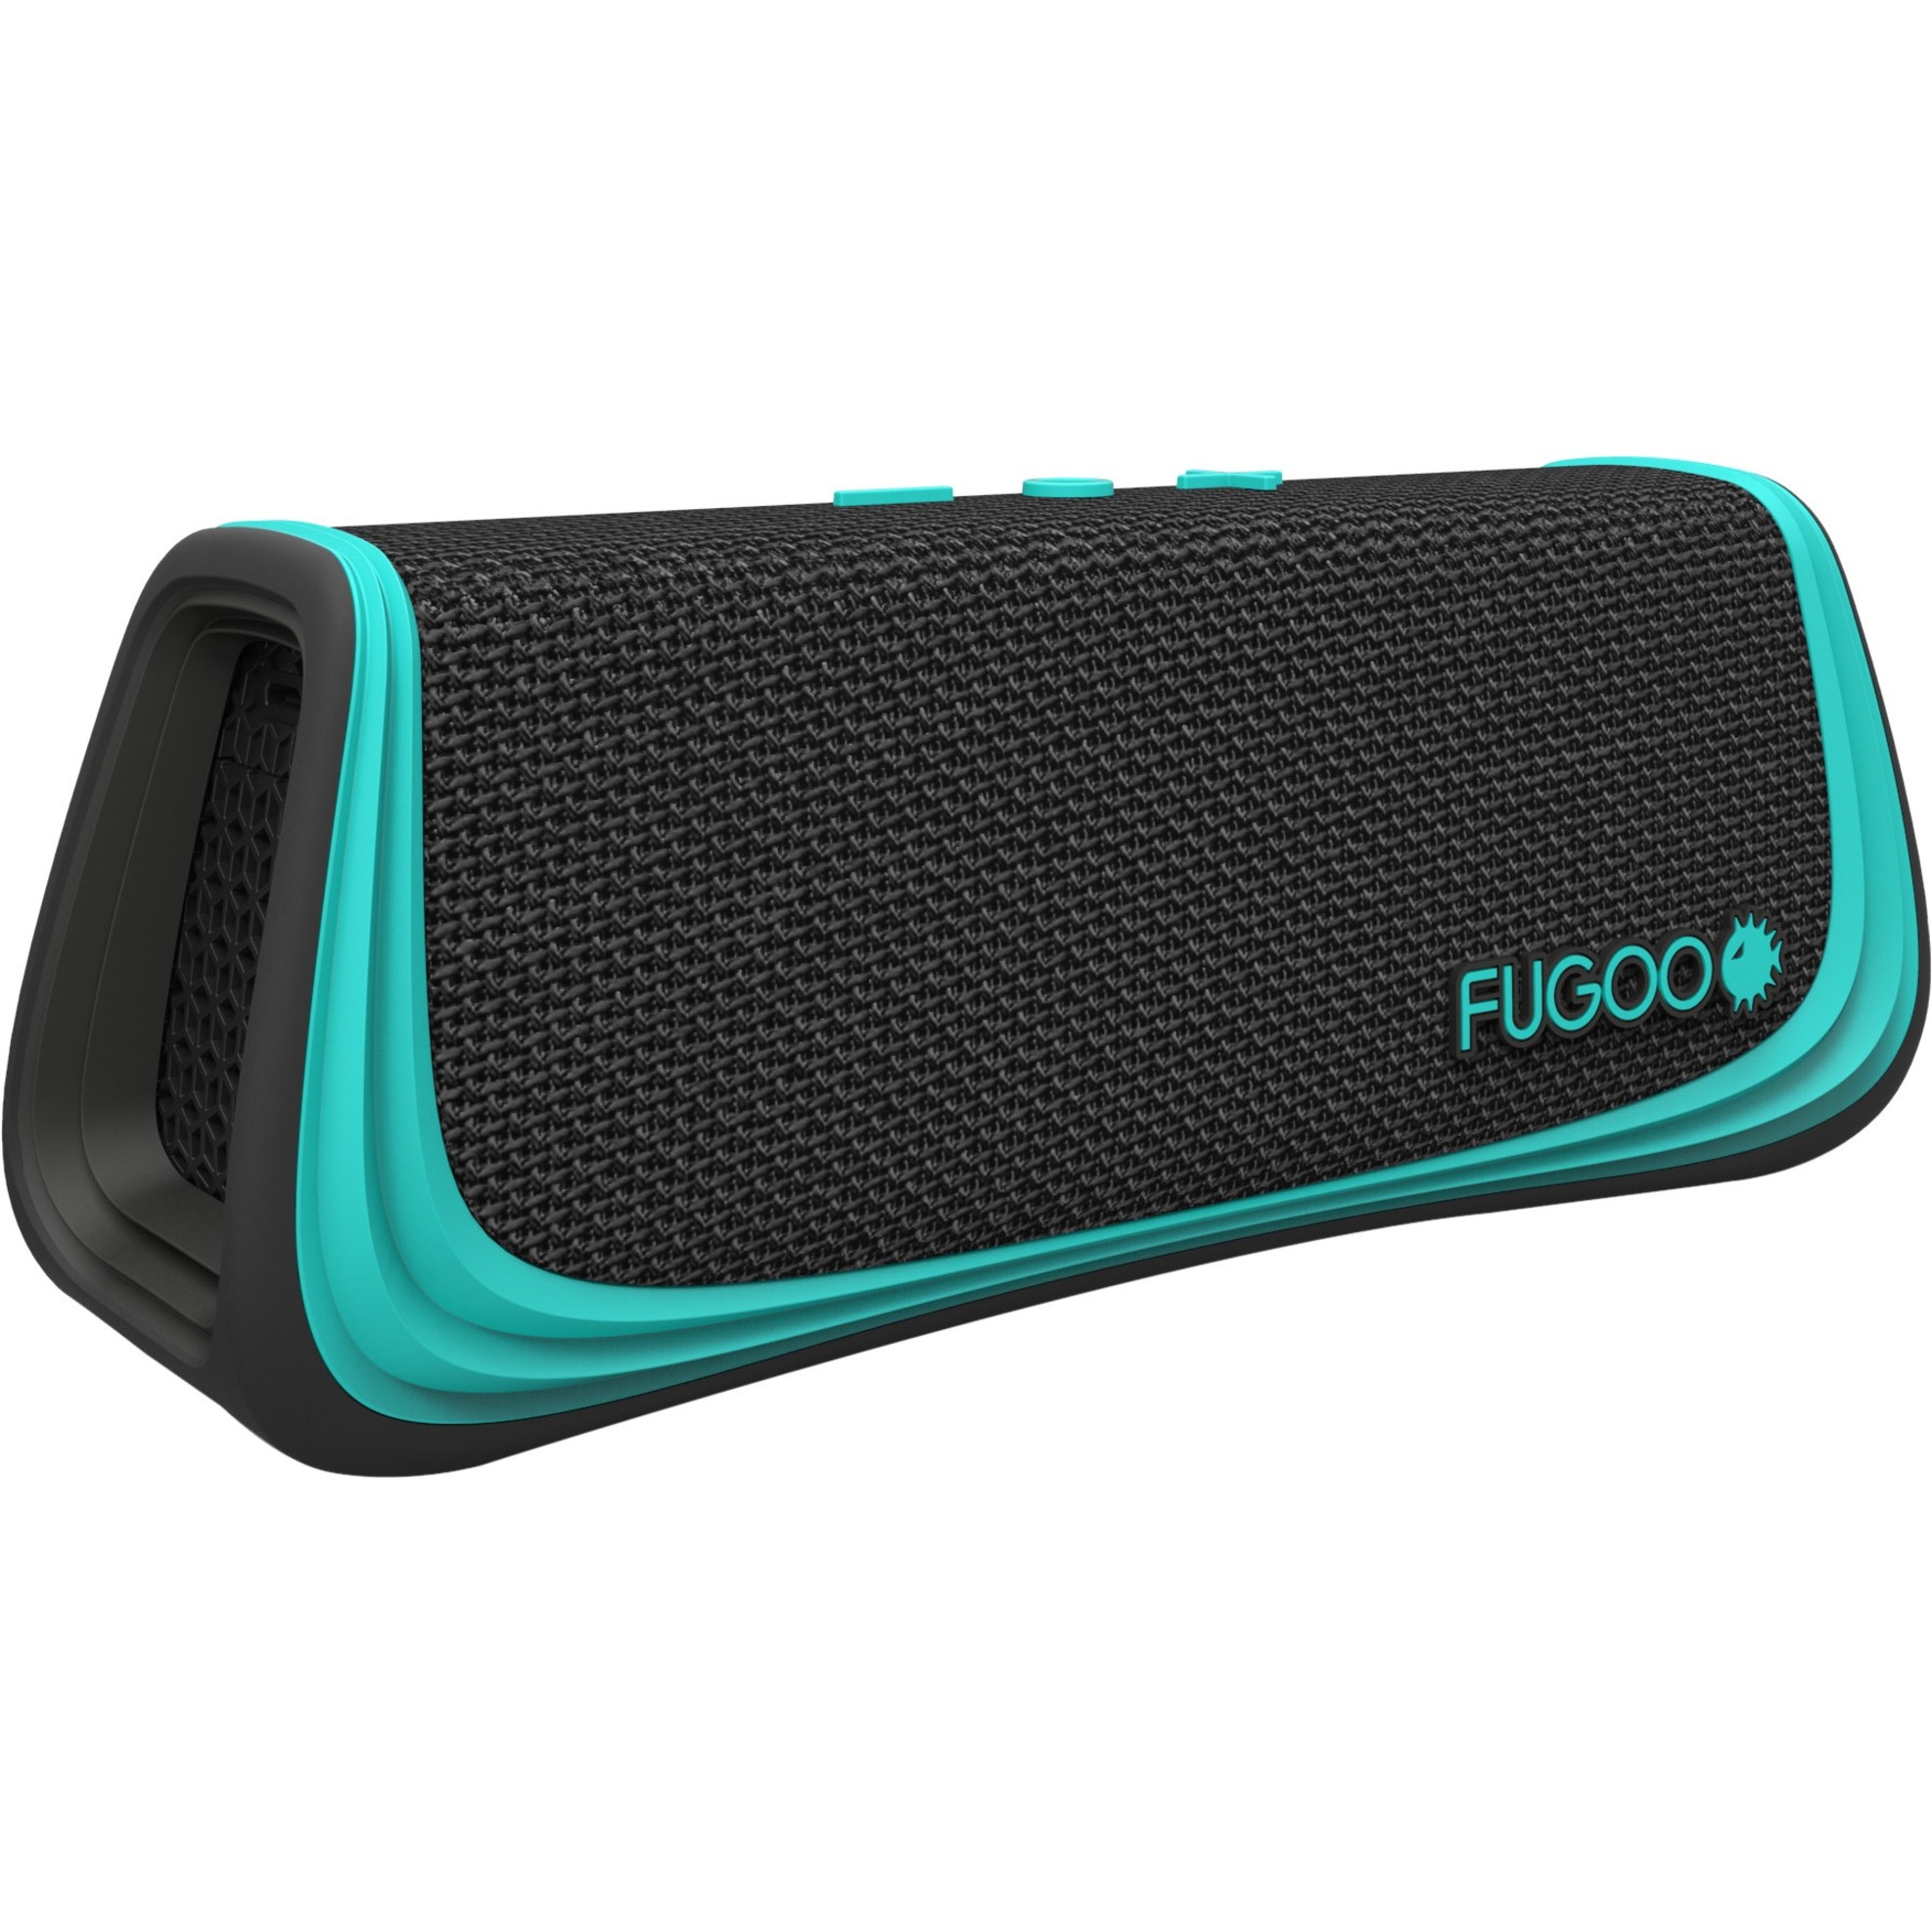 Fugoo Portable Bluetooth Speaker, Black, SPORT - image 4 of 5